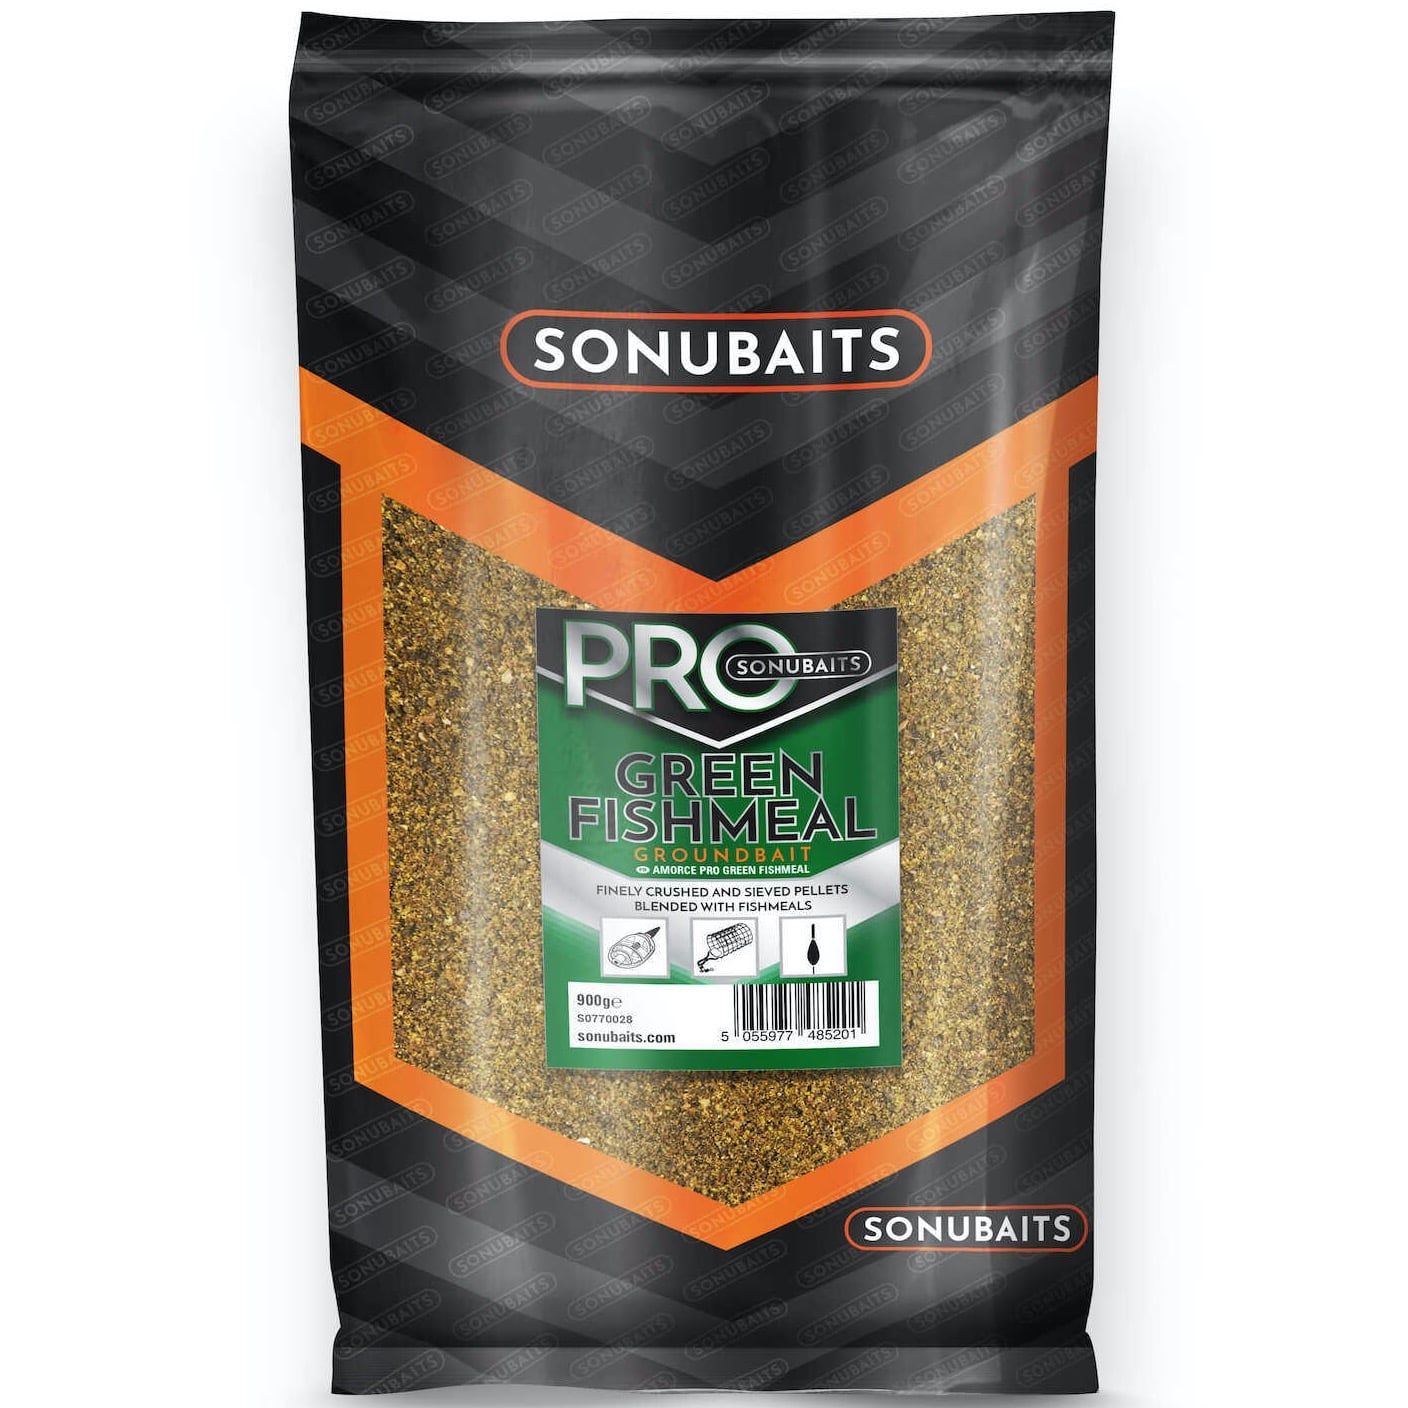 Sonubaits pro green fishmeal